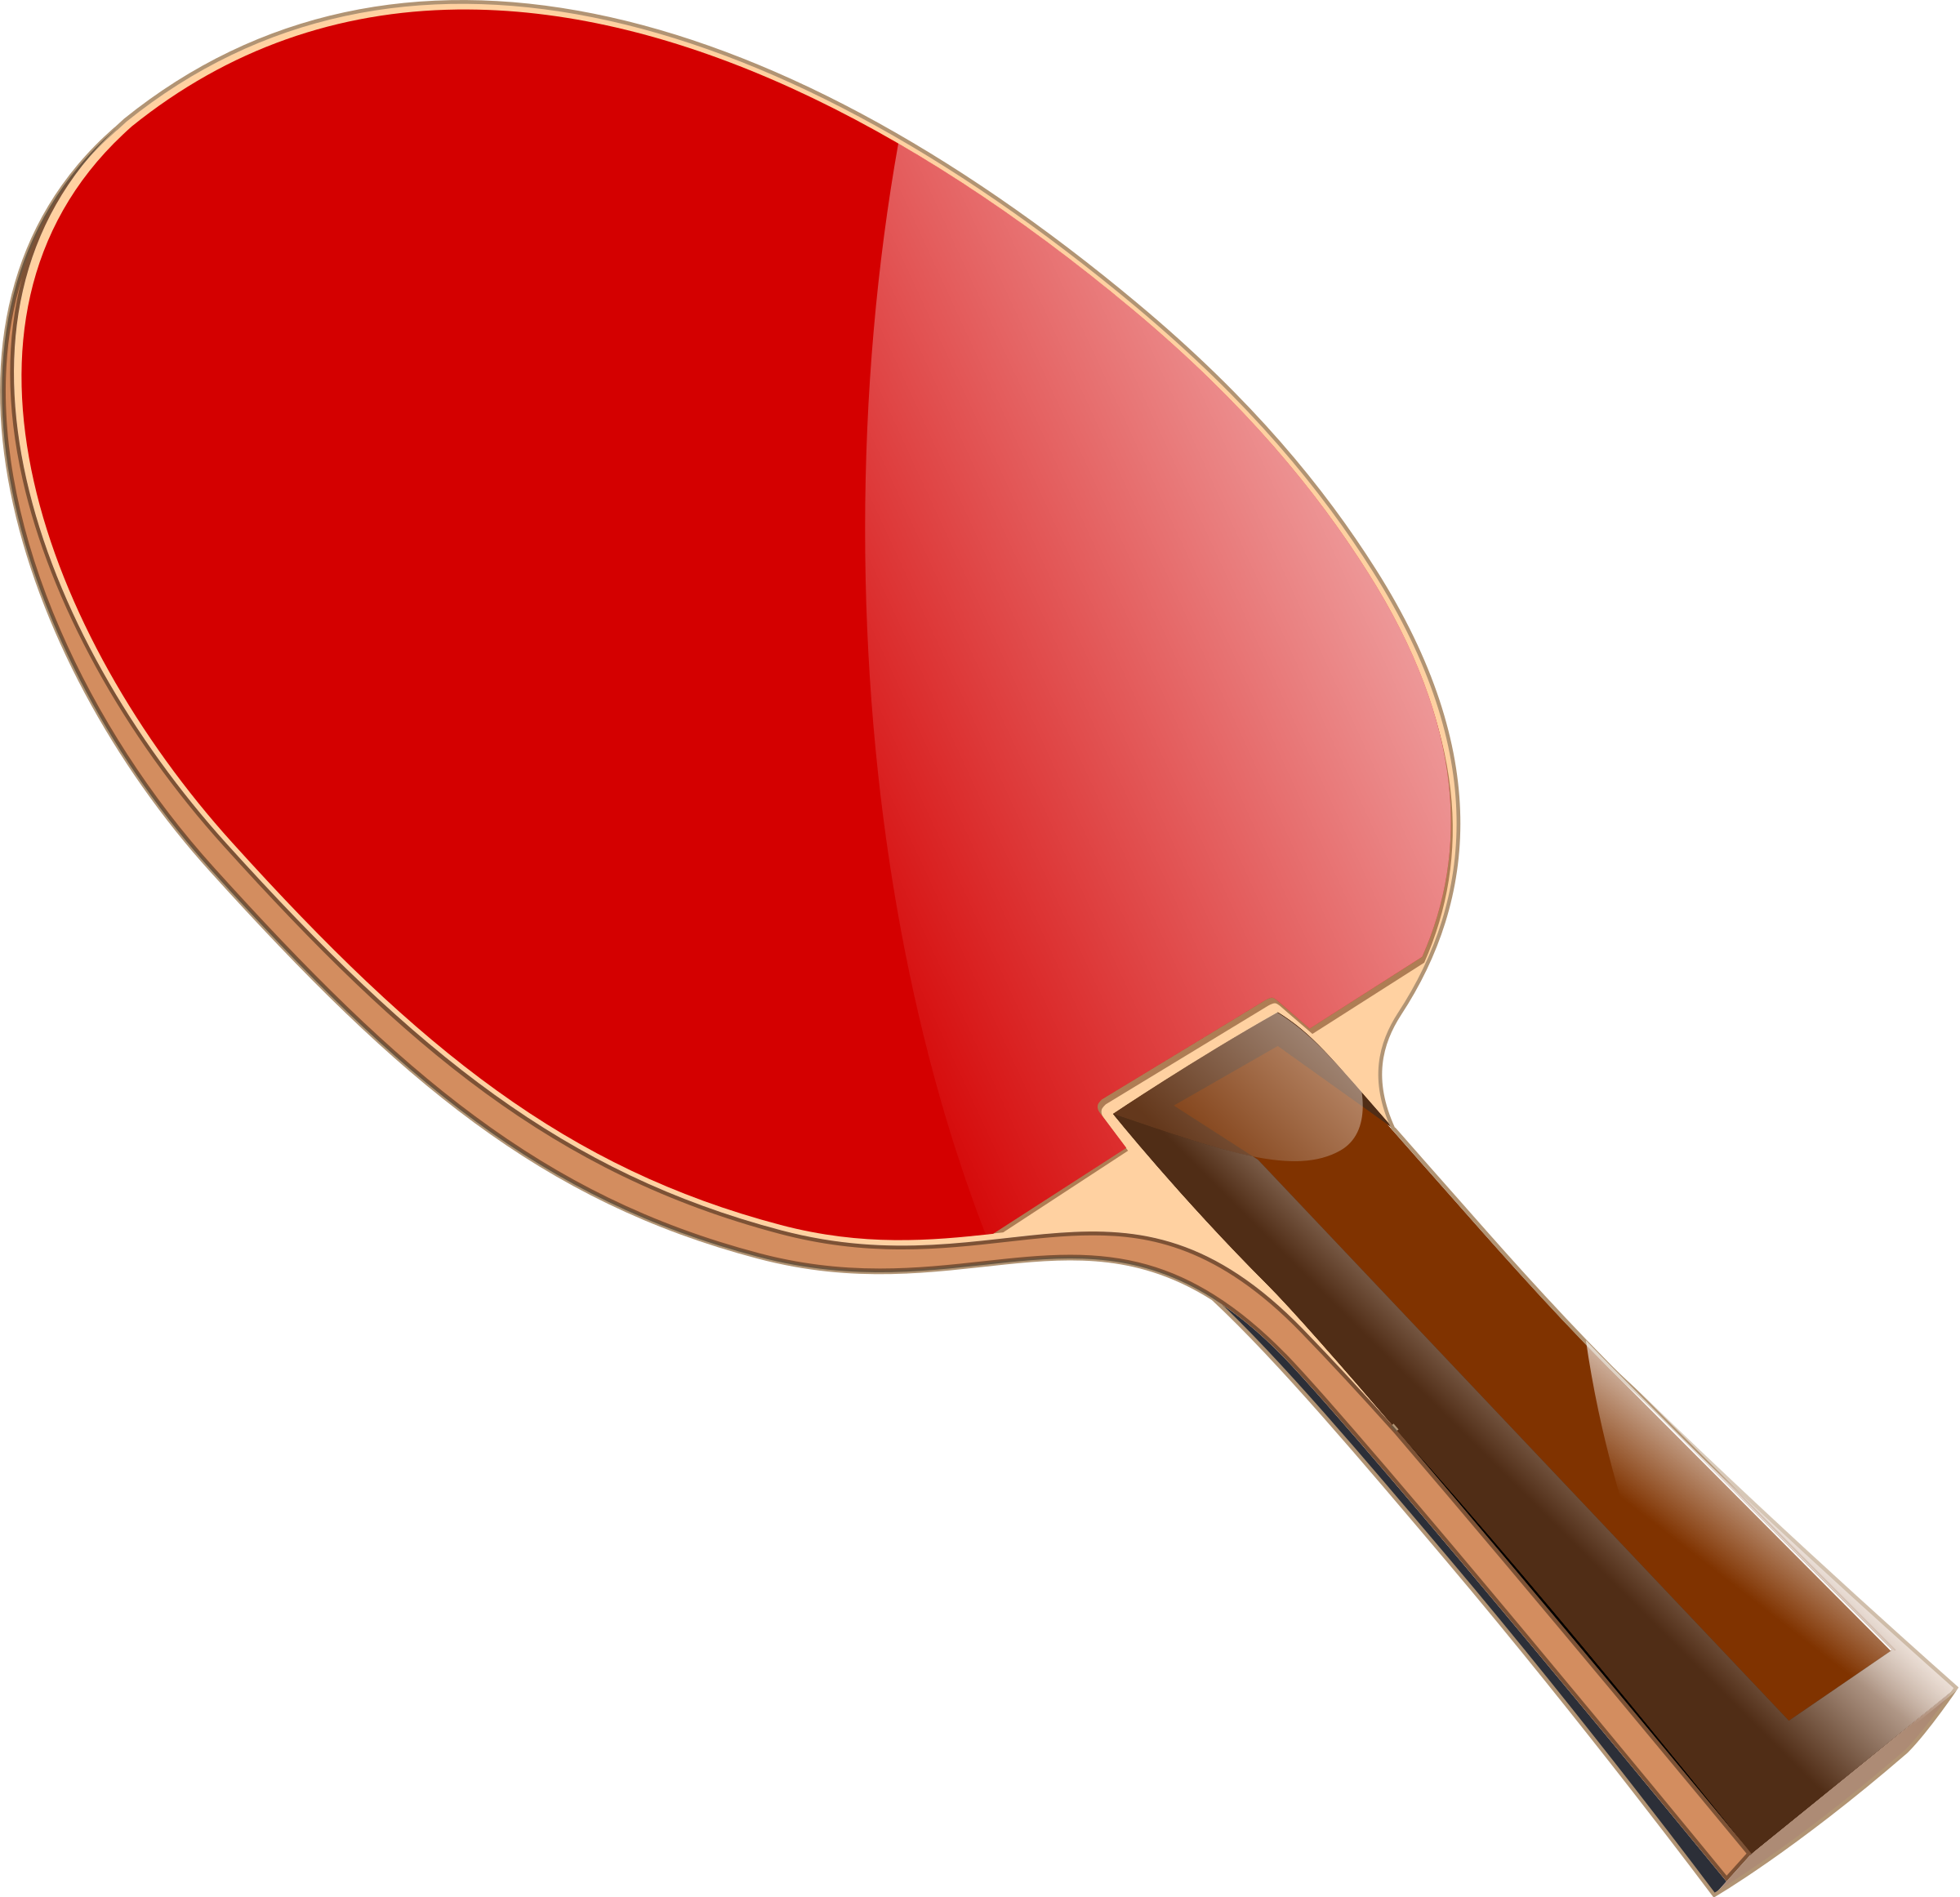 Ping Pong Racket Png Image - Ping Pong, Transparent background PNG HD thumbnail